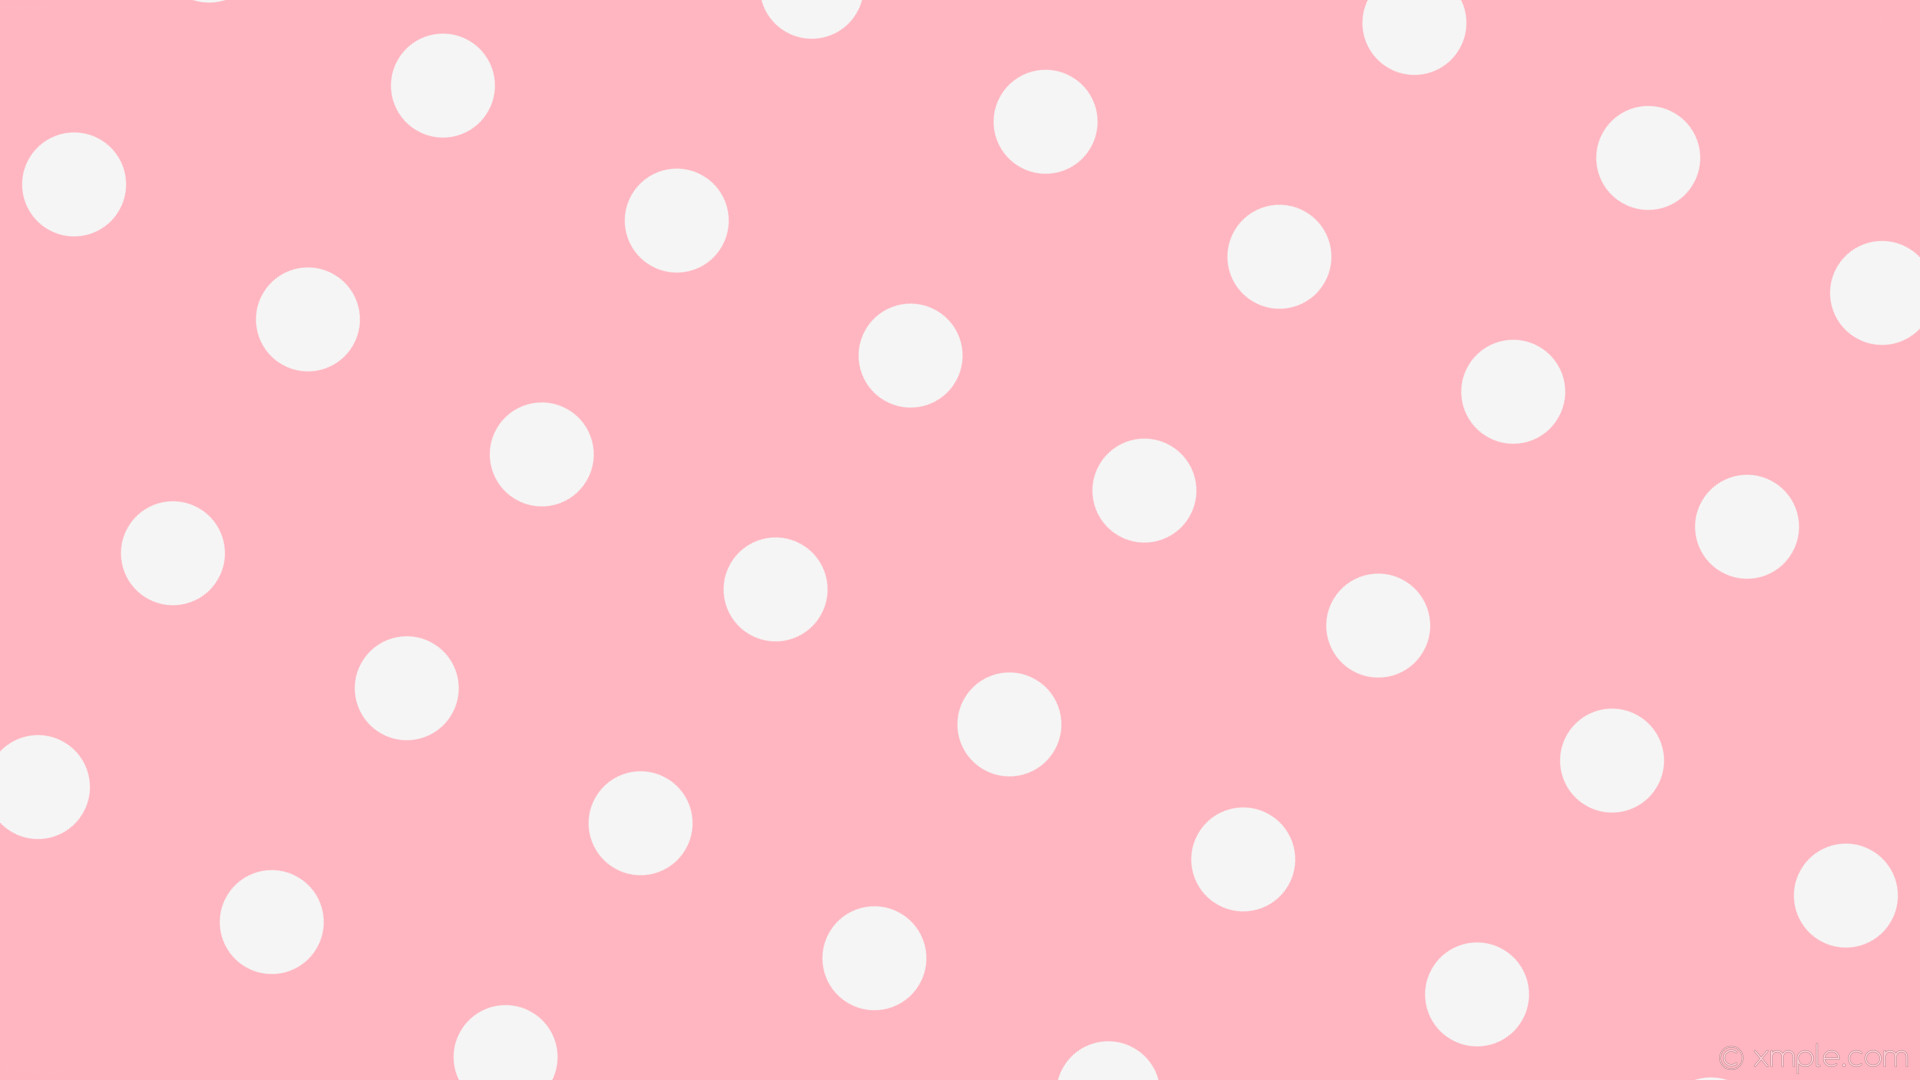 1920x1080 wallpaper pink polka dots white spots light pink white smoke #ffb6c1  #f5f5f5 240Â°